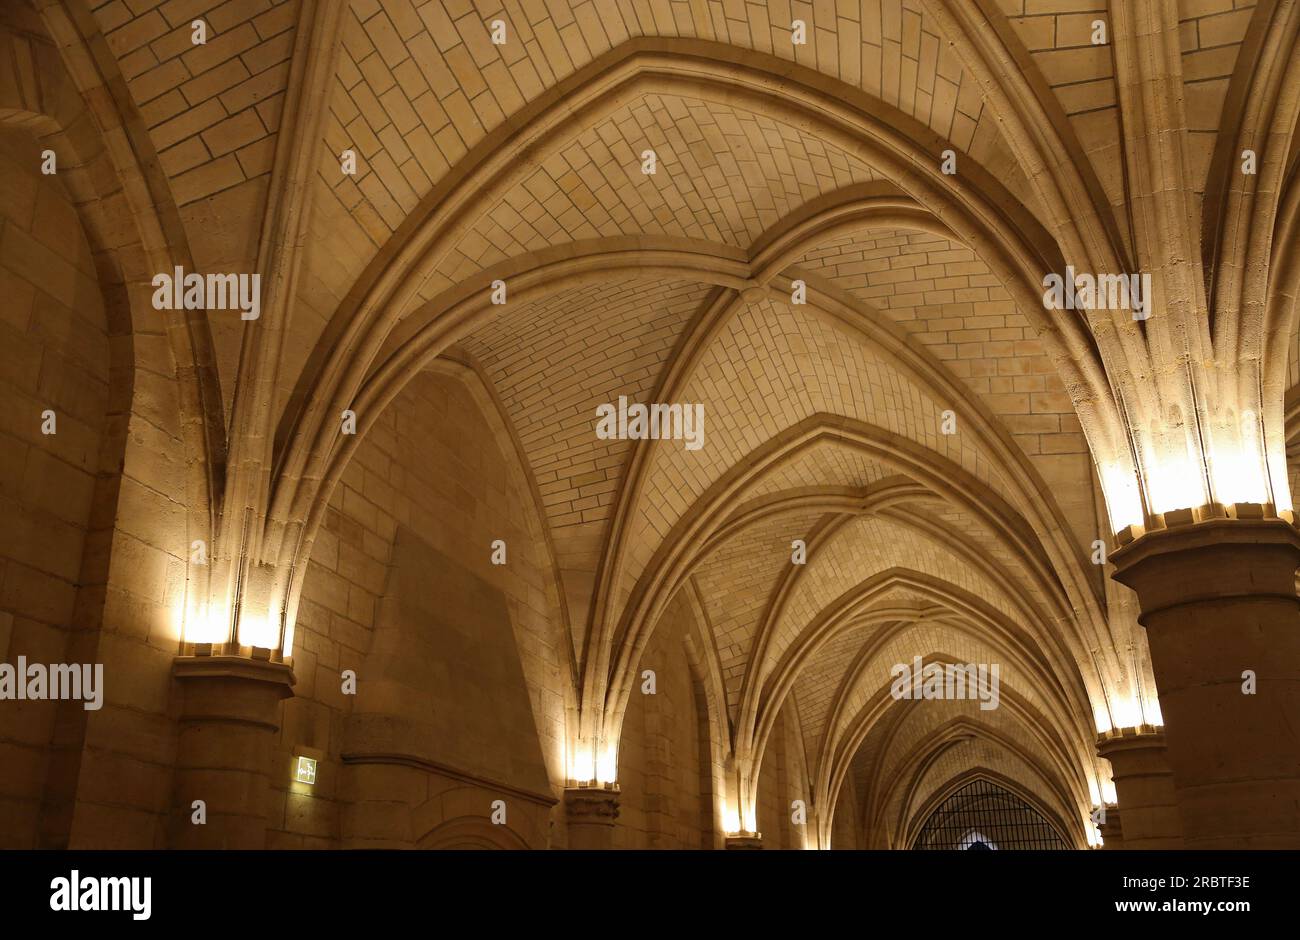 The ceiling of the main hall - La Conciergerie interior, Paris, France Stock Photo